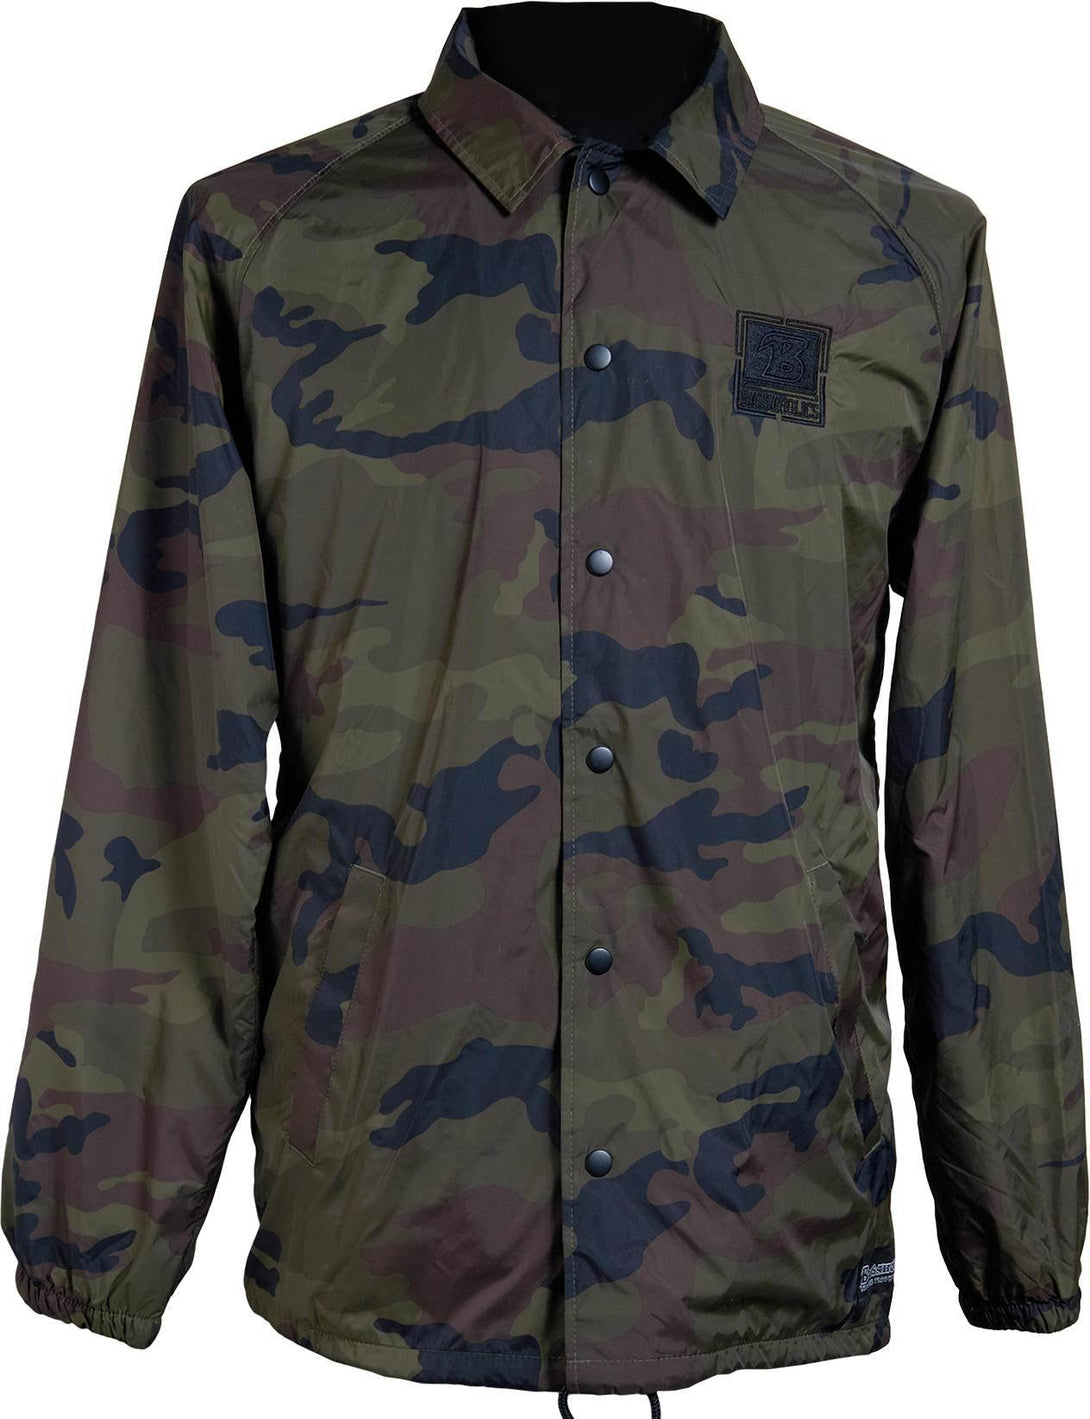 Boxed fishing windbreaker camo jacket